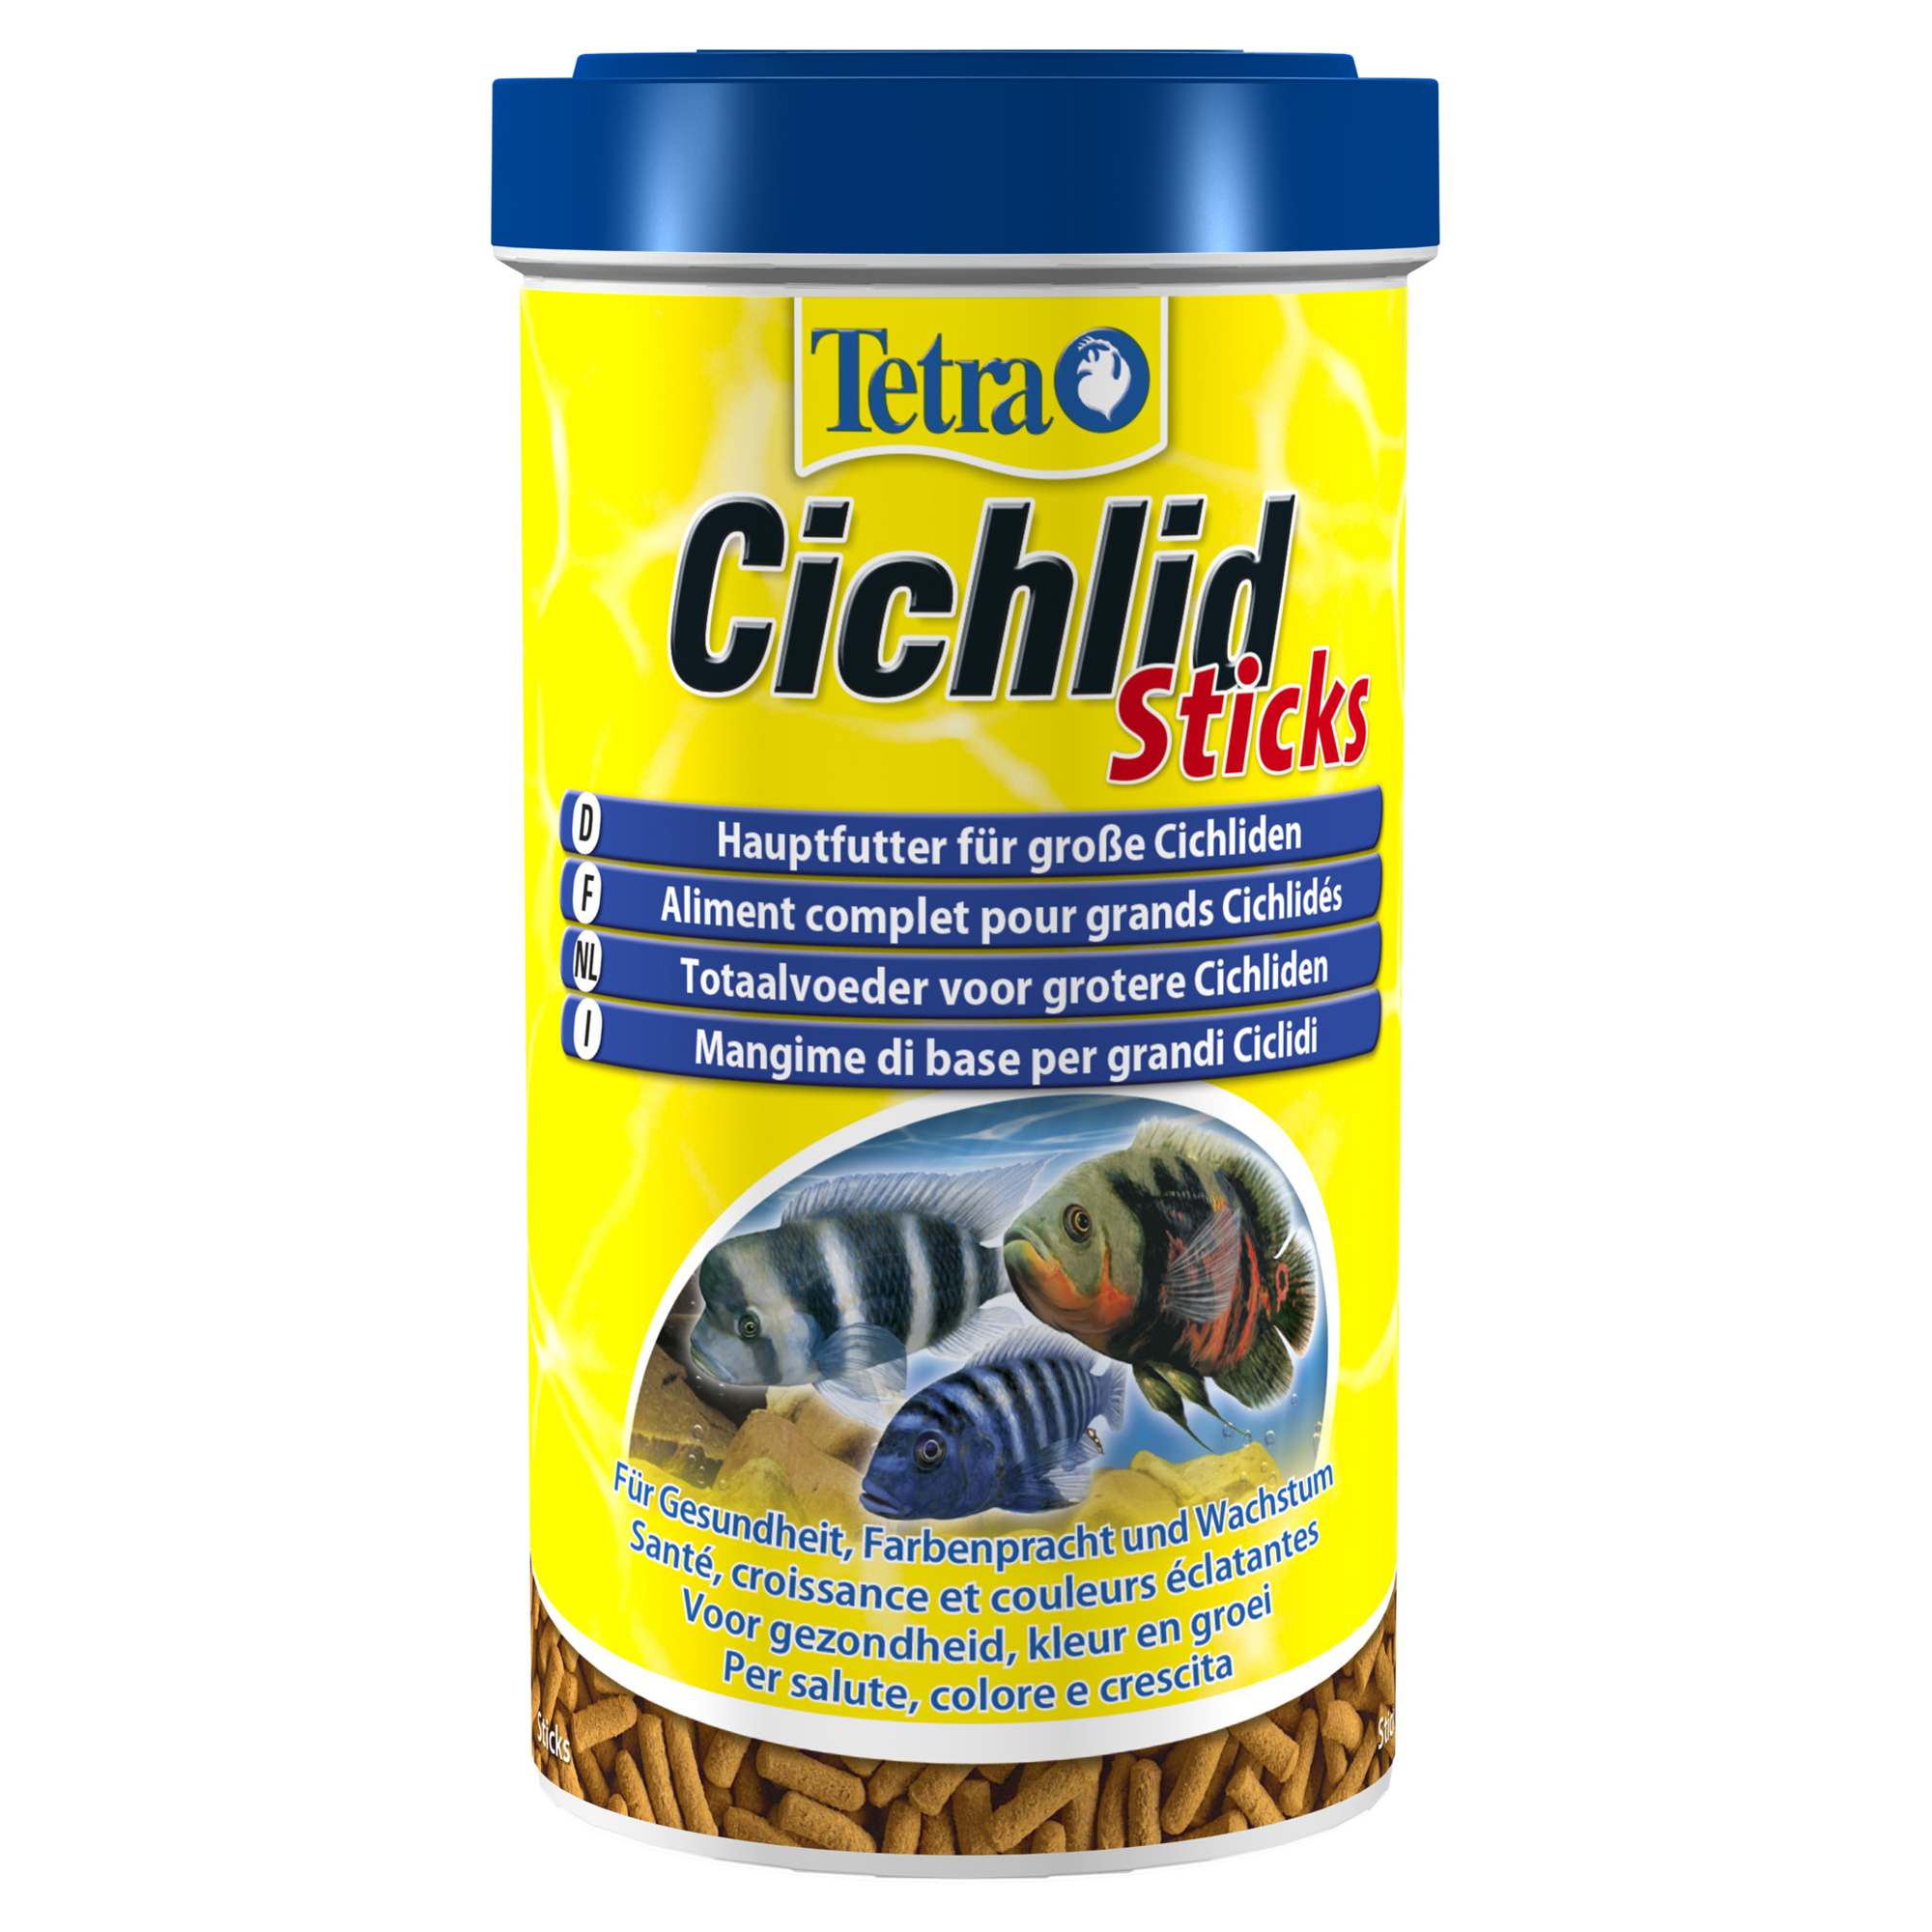 Fischfutter Cichlid Sticks 160 g + product picture